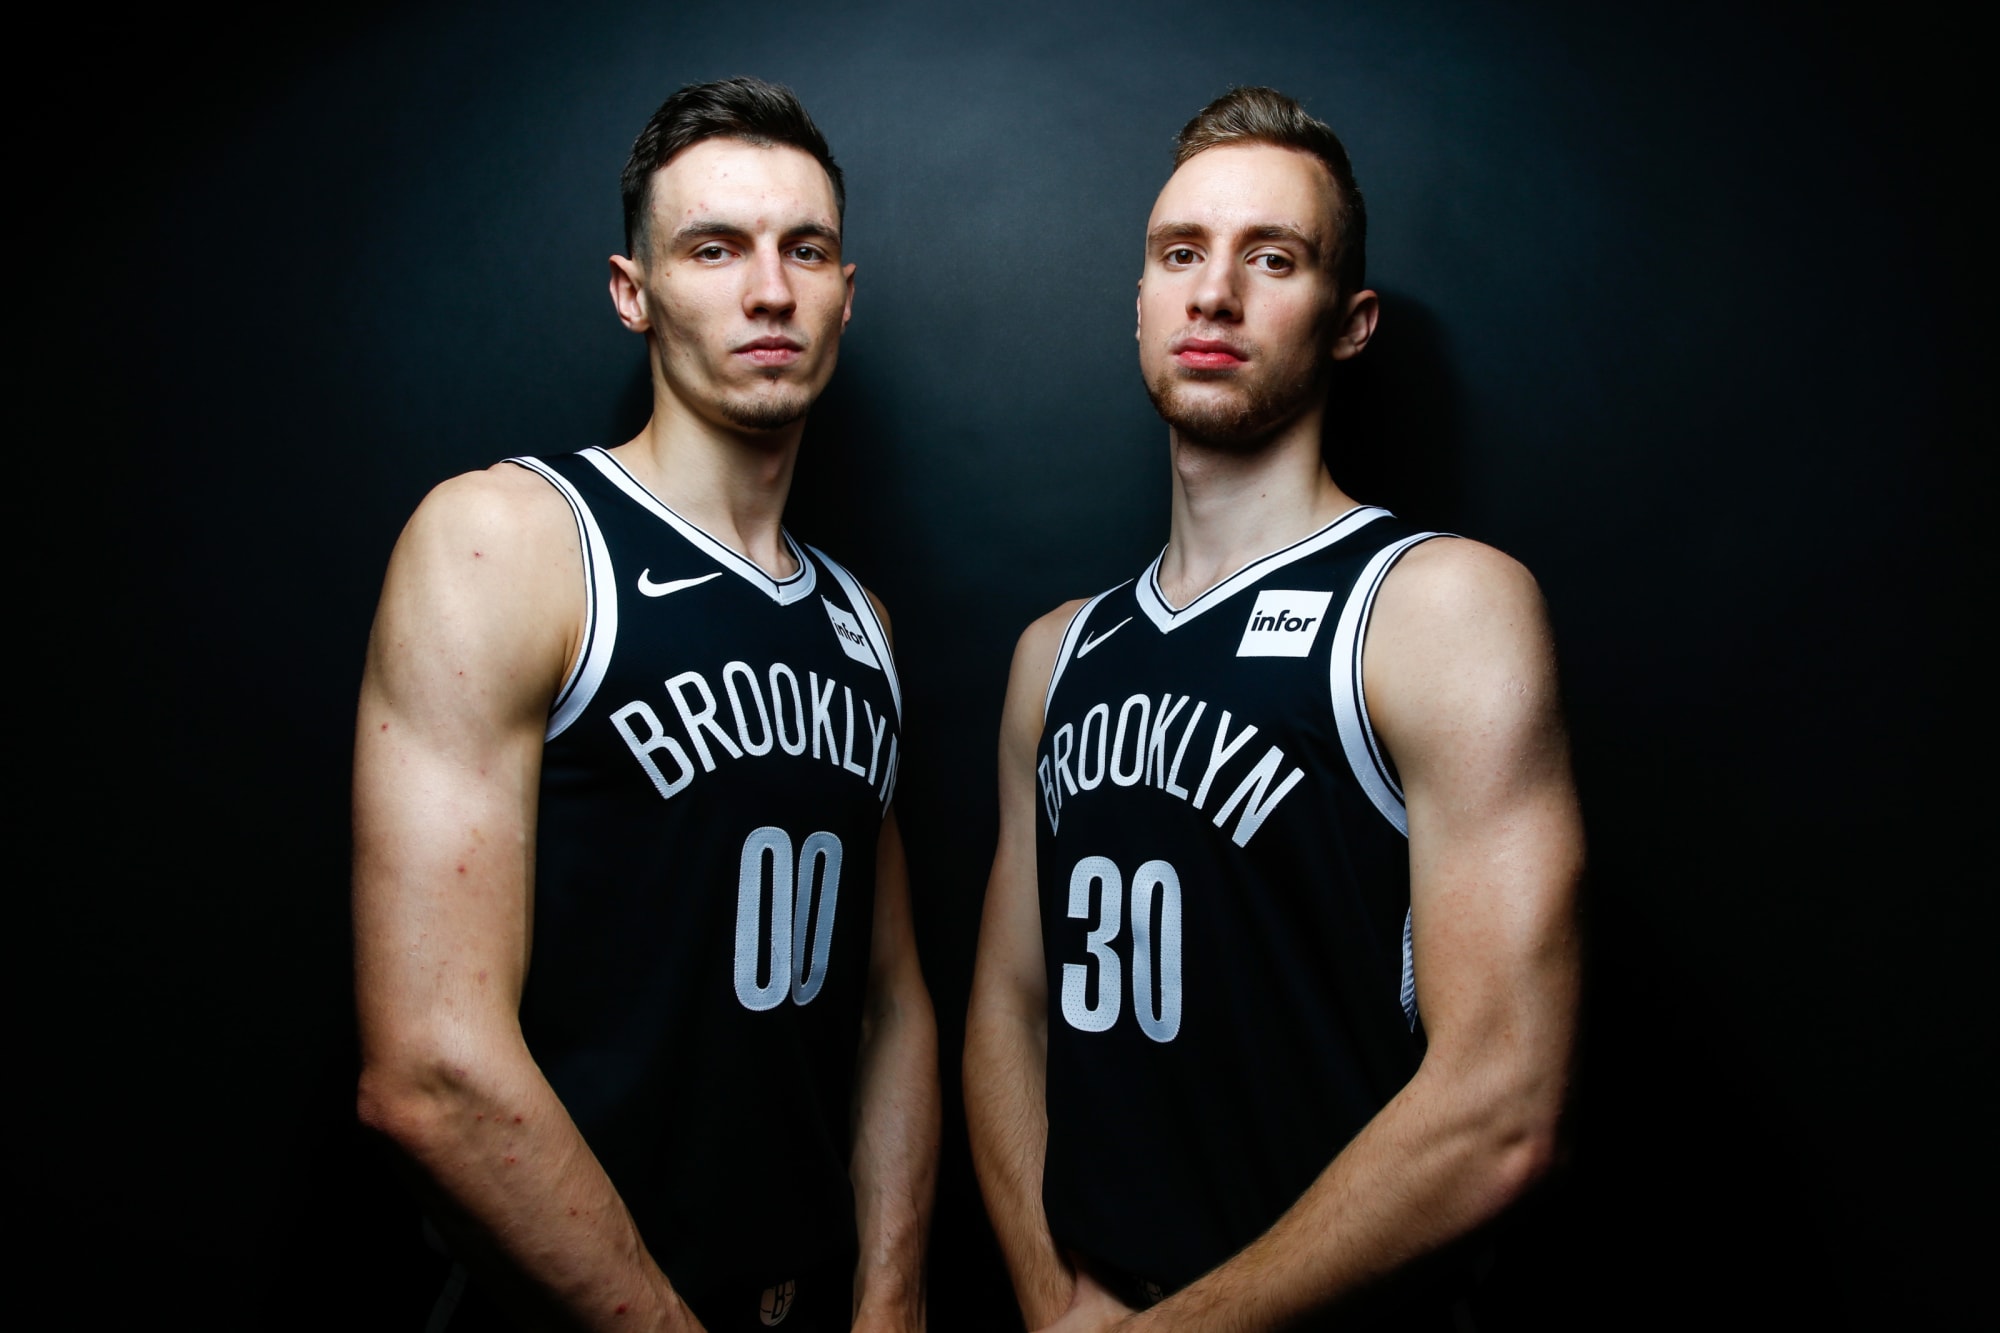 Brooklyn Nets: Are rookies Brooklyn or Long Island ready?